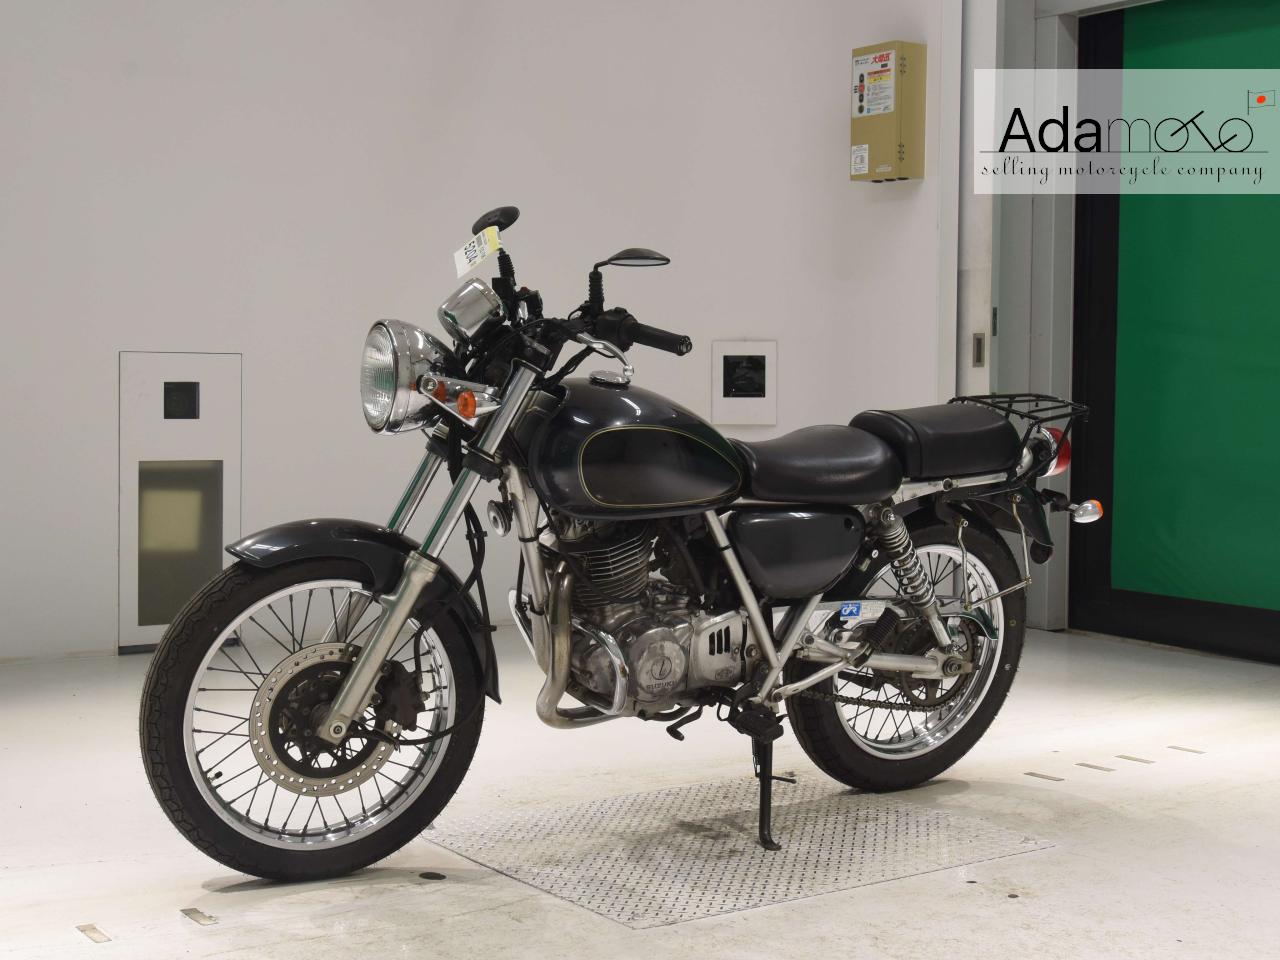 Suzuki ST250E - Adamoto - Motorcycles from Japan